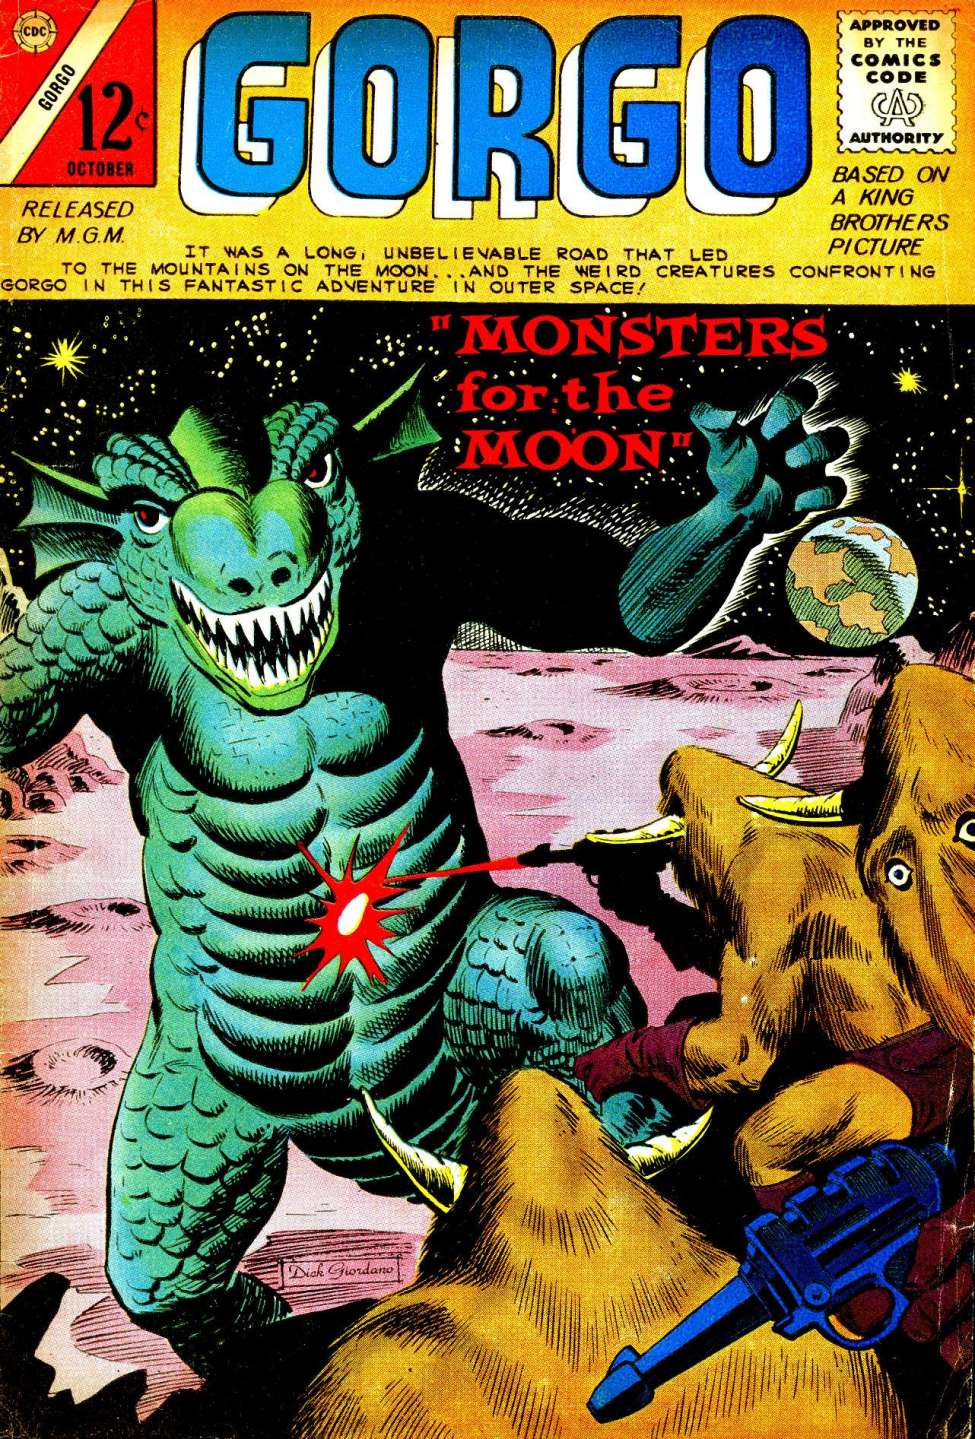 Comic Book Cover For Gorgo 20